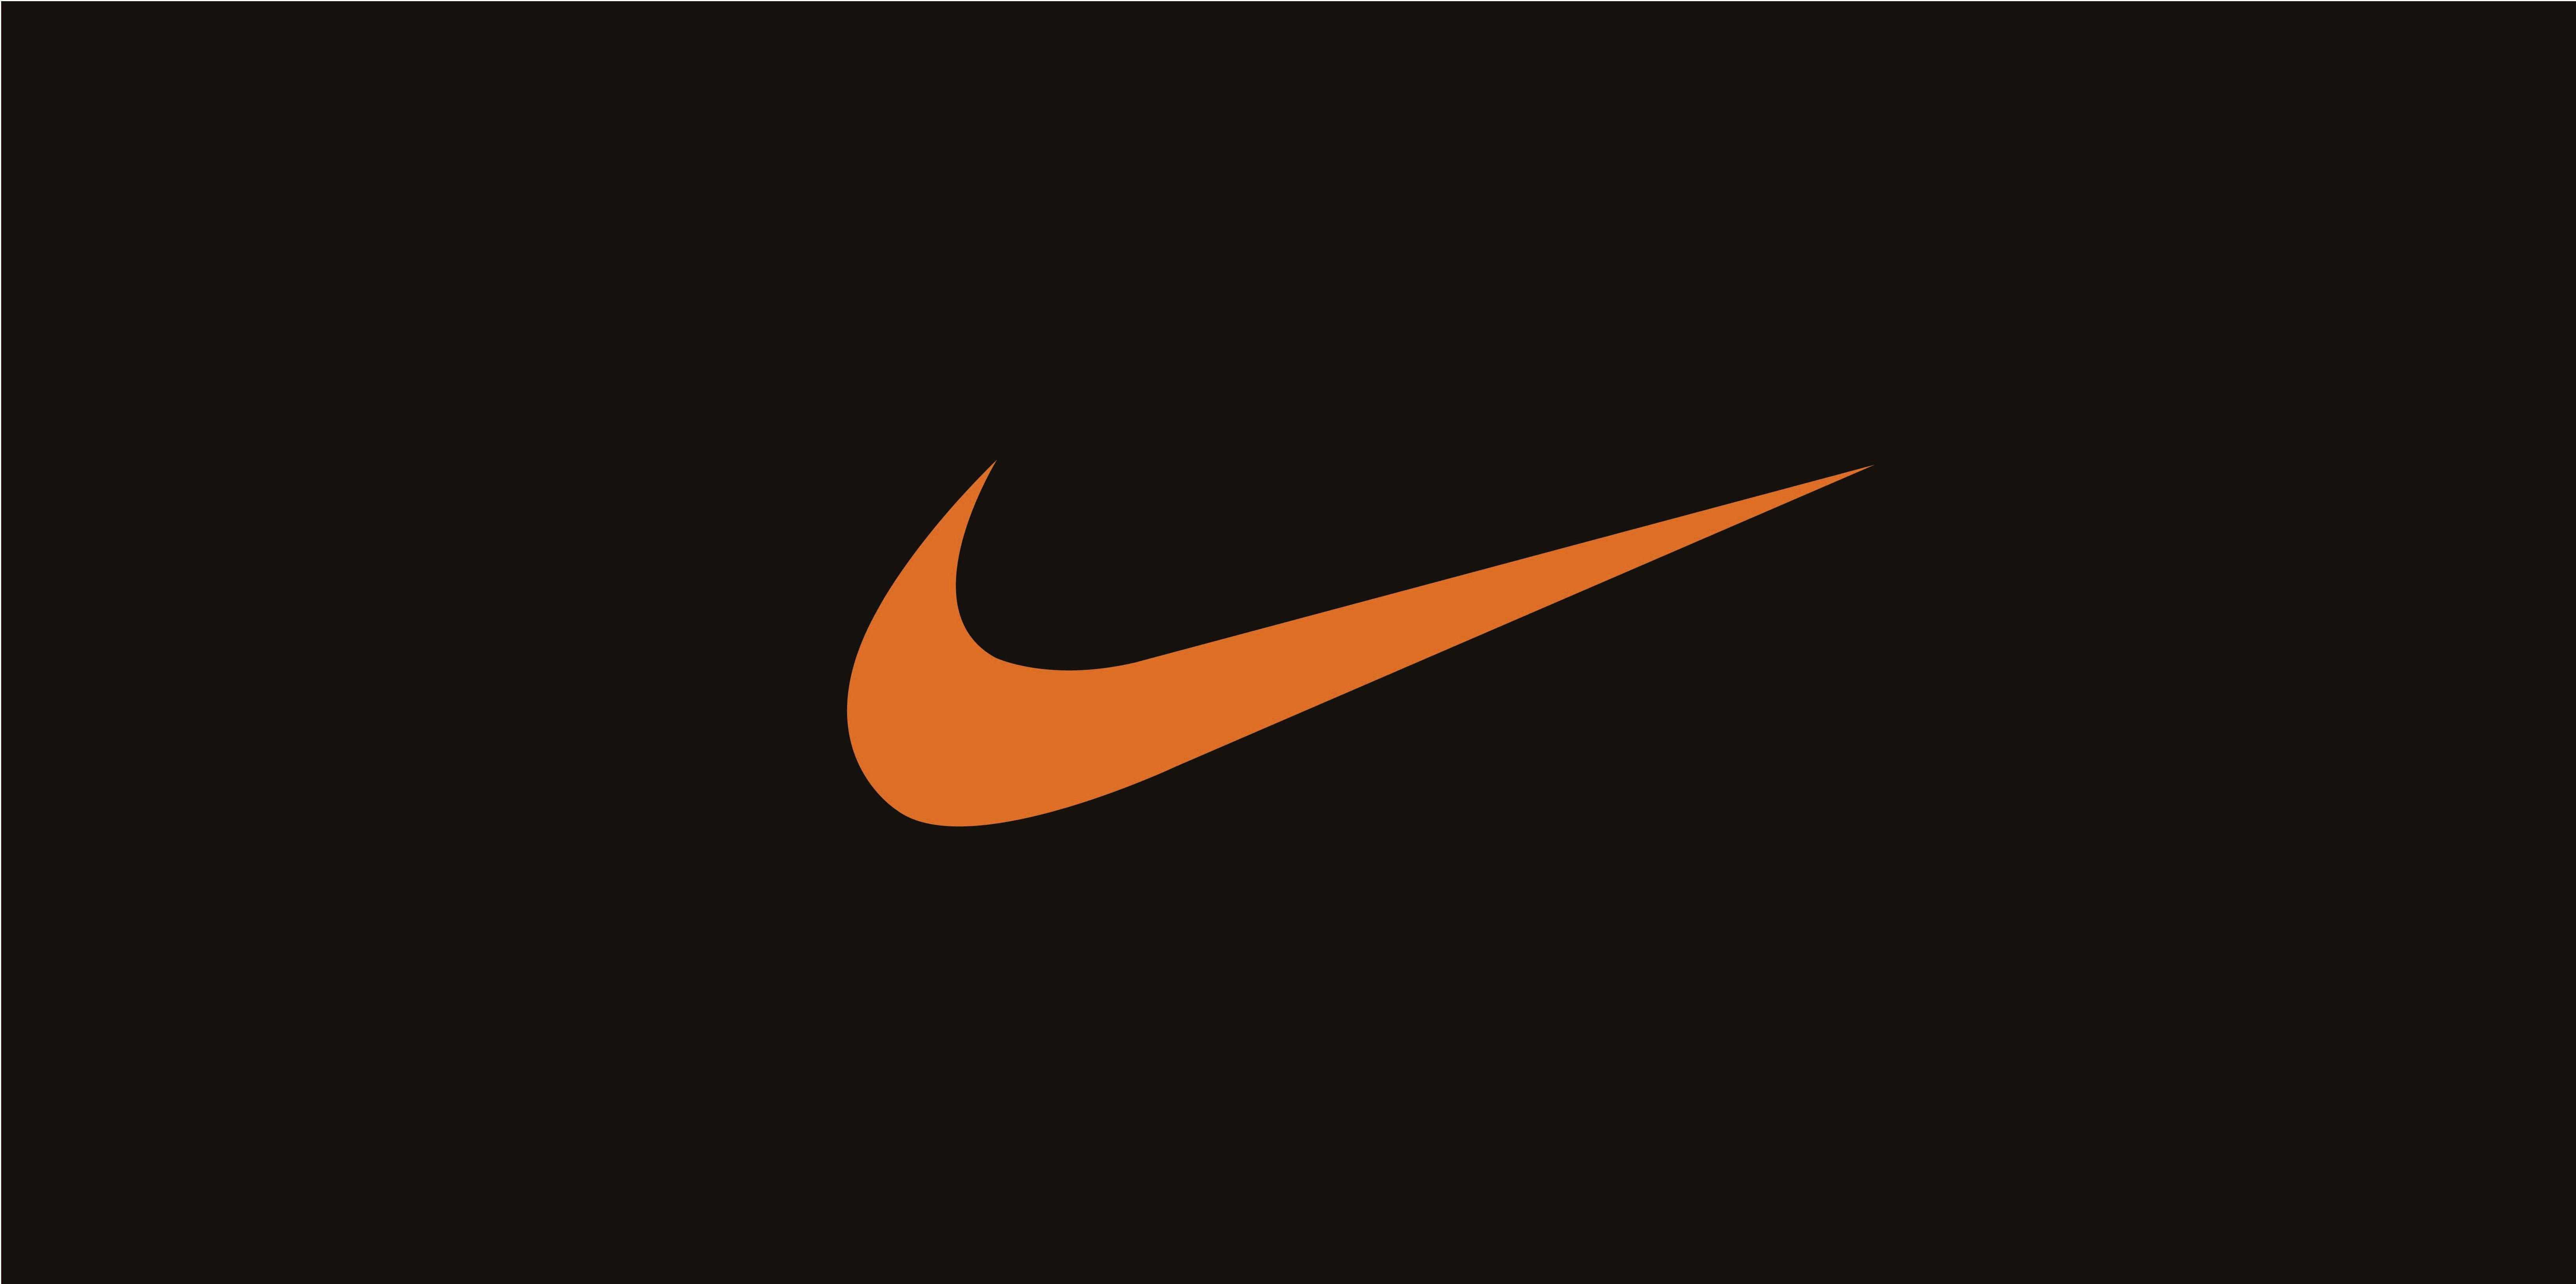 Cool Red Nike Logo - Nike Logo Wallpapers HD free download | PixelsTalk.Net